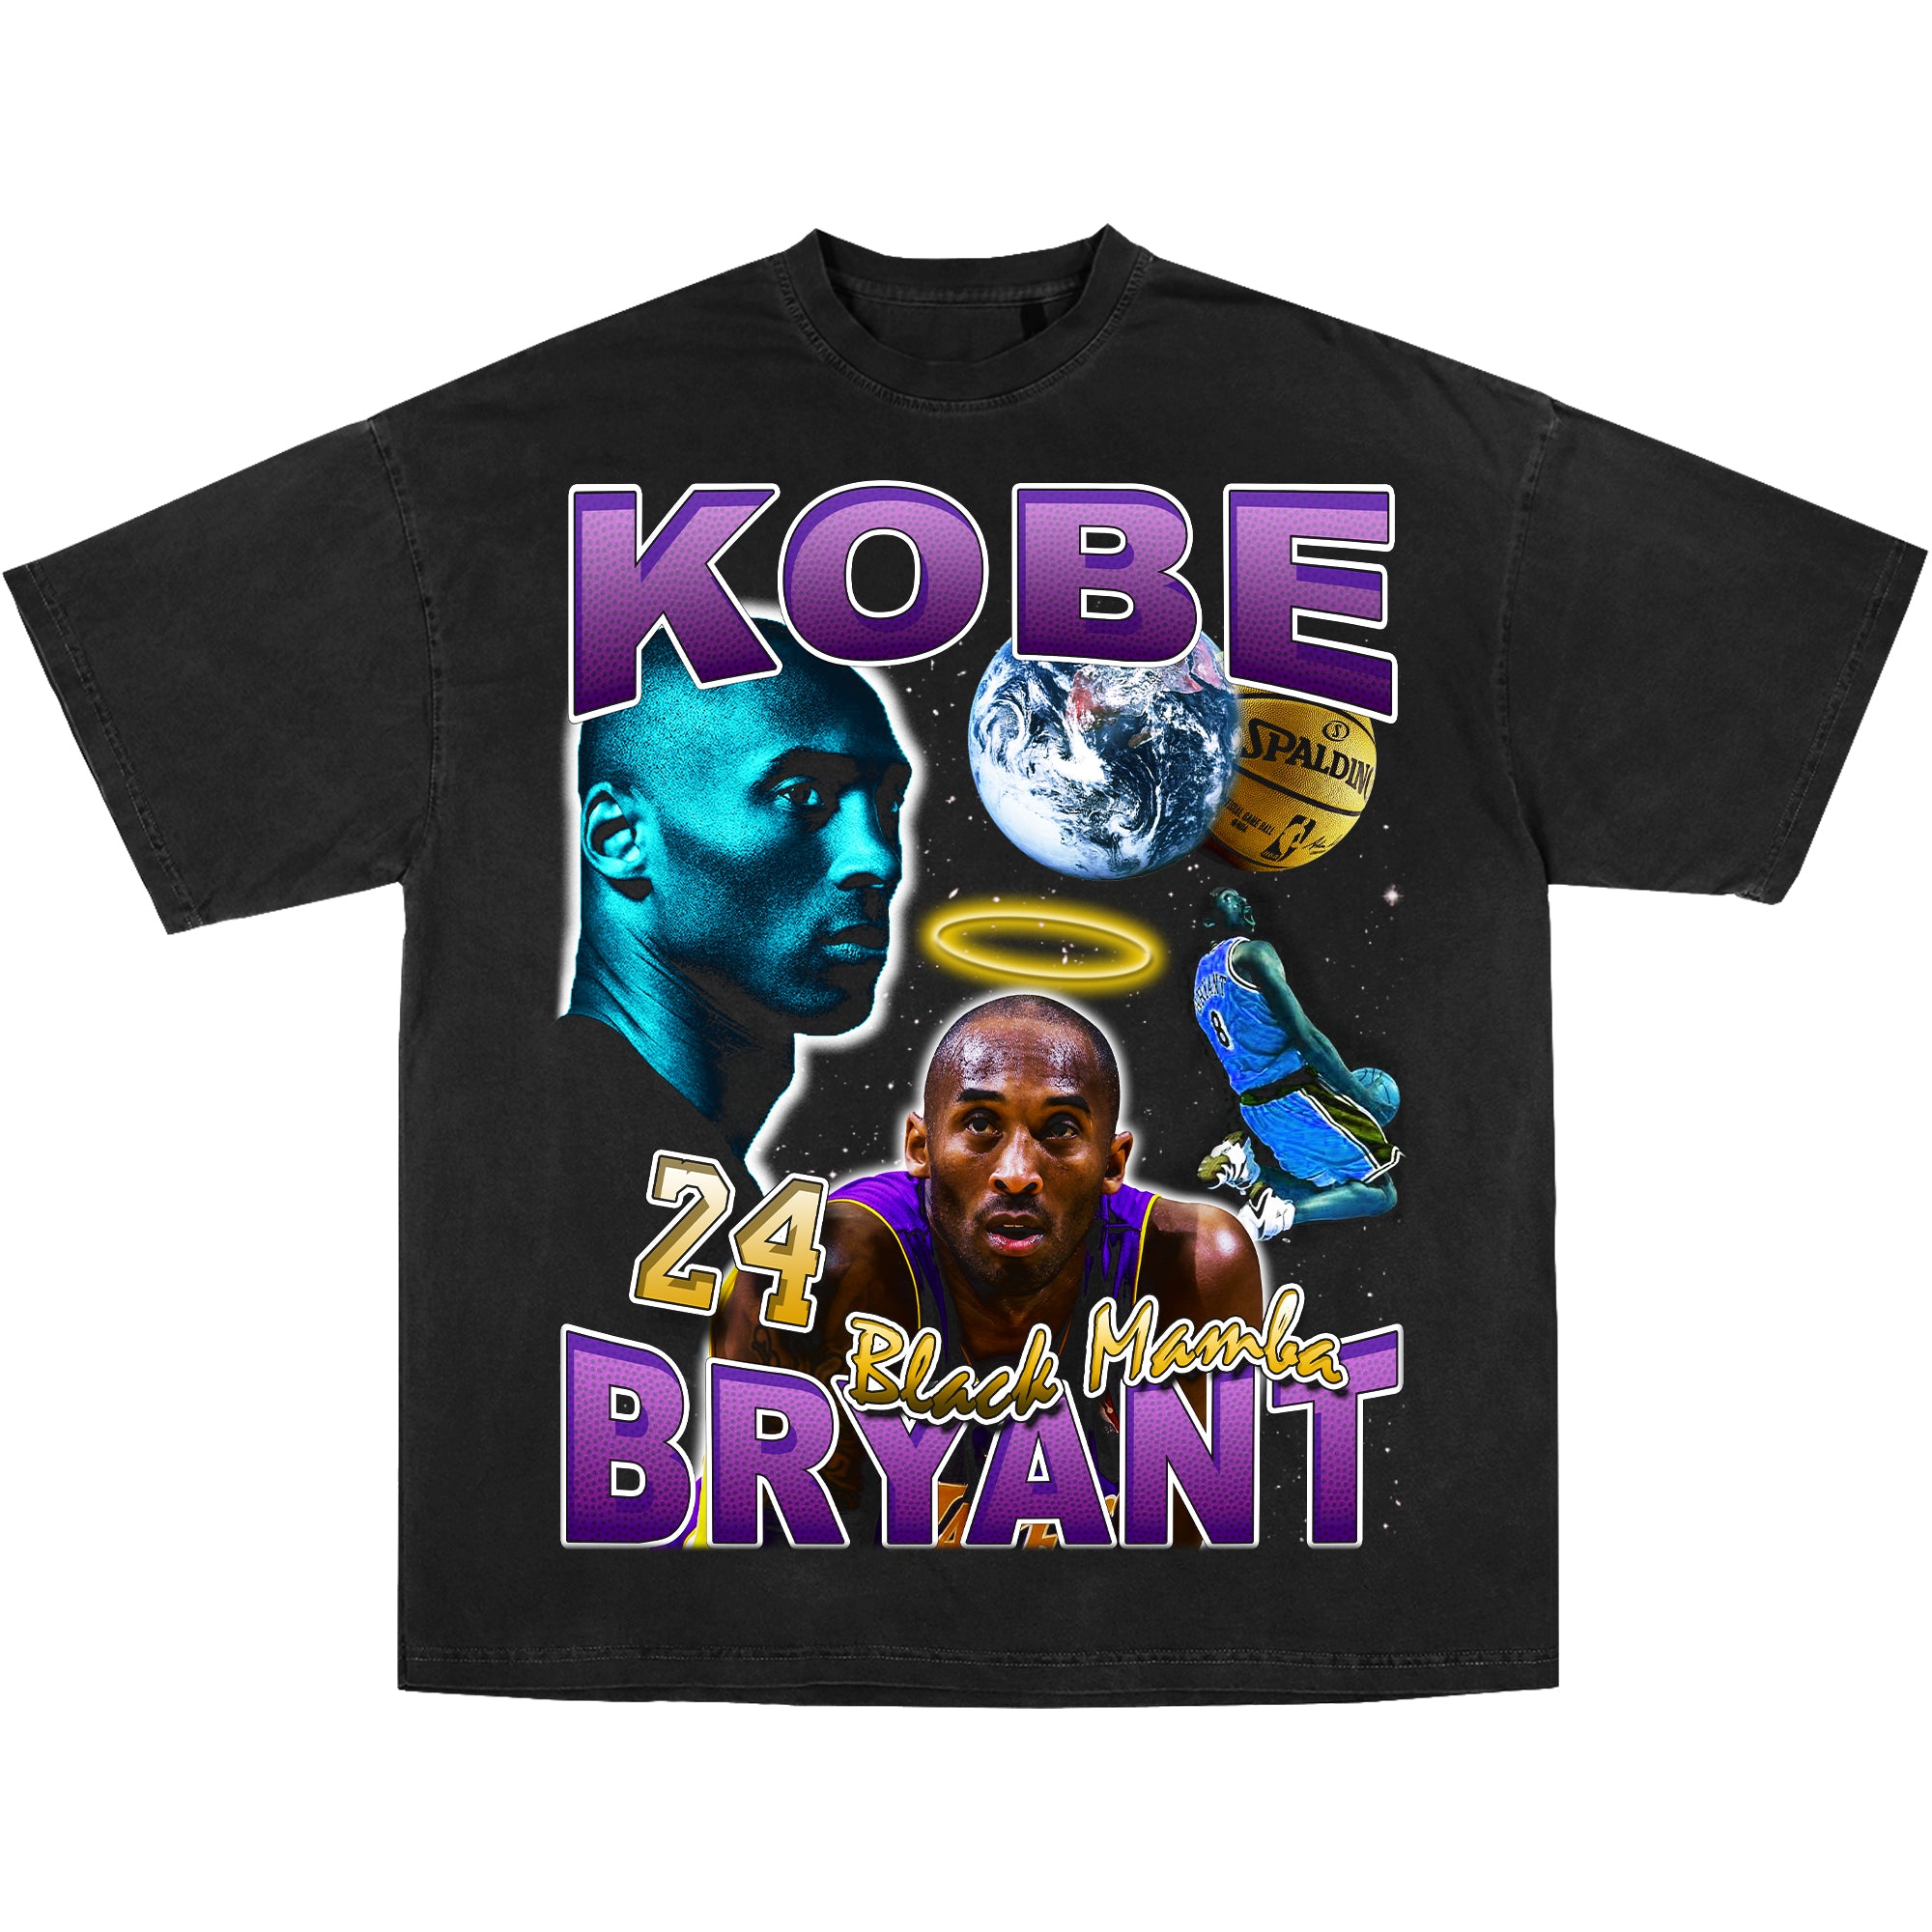 Kobe Bryant T-Shirts for Sale